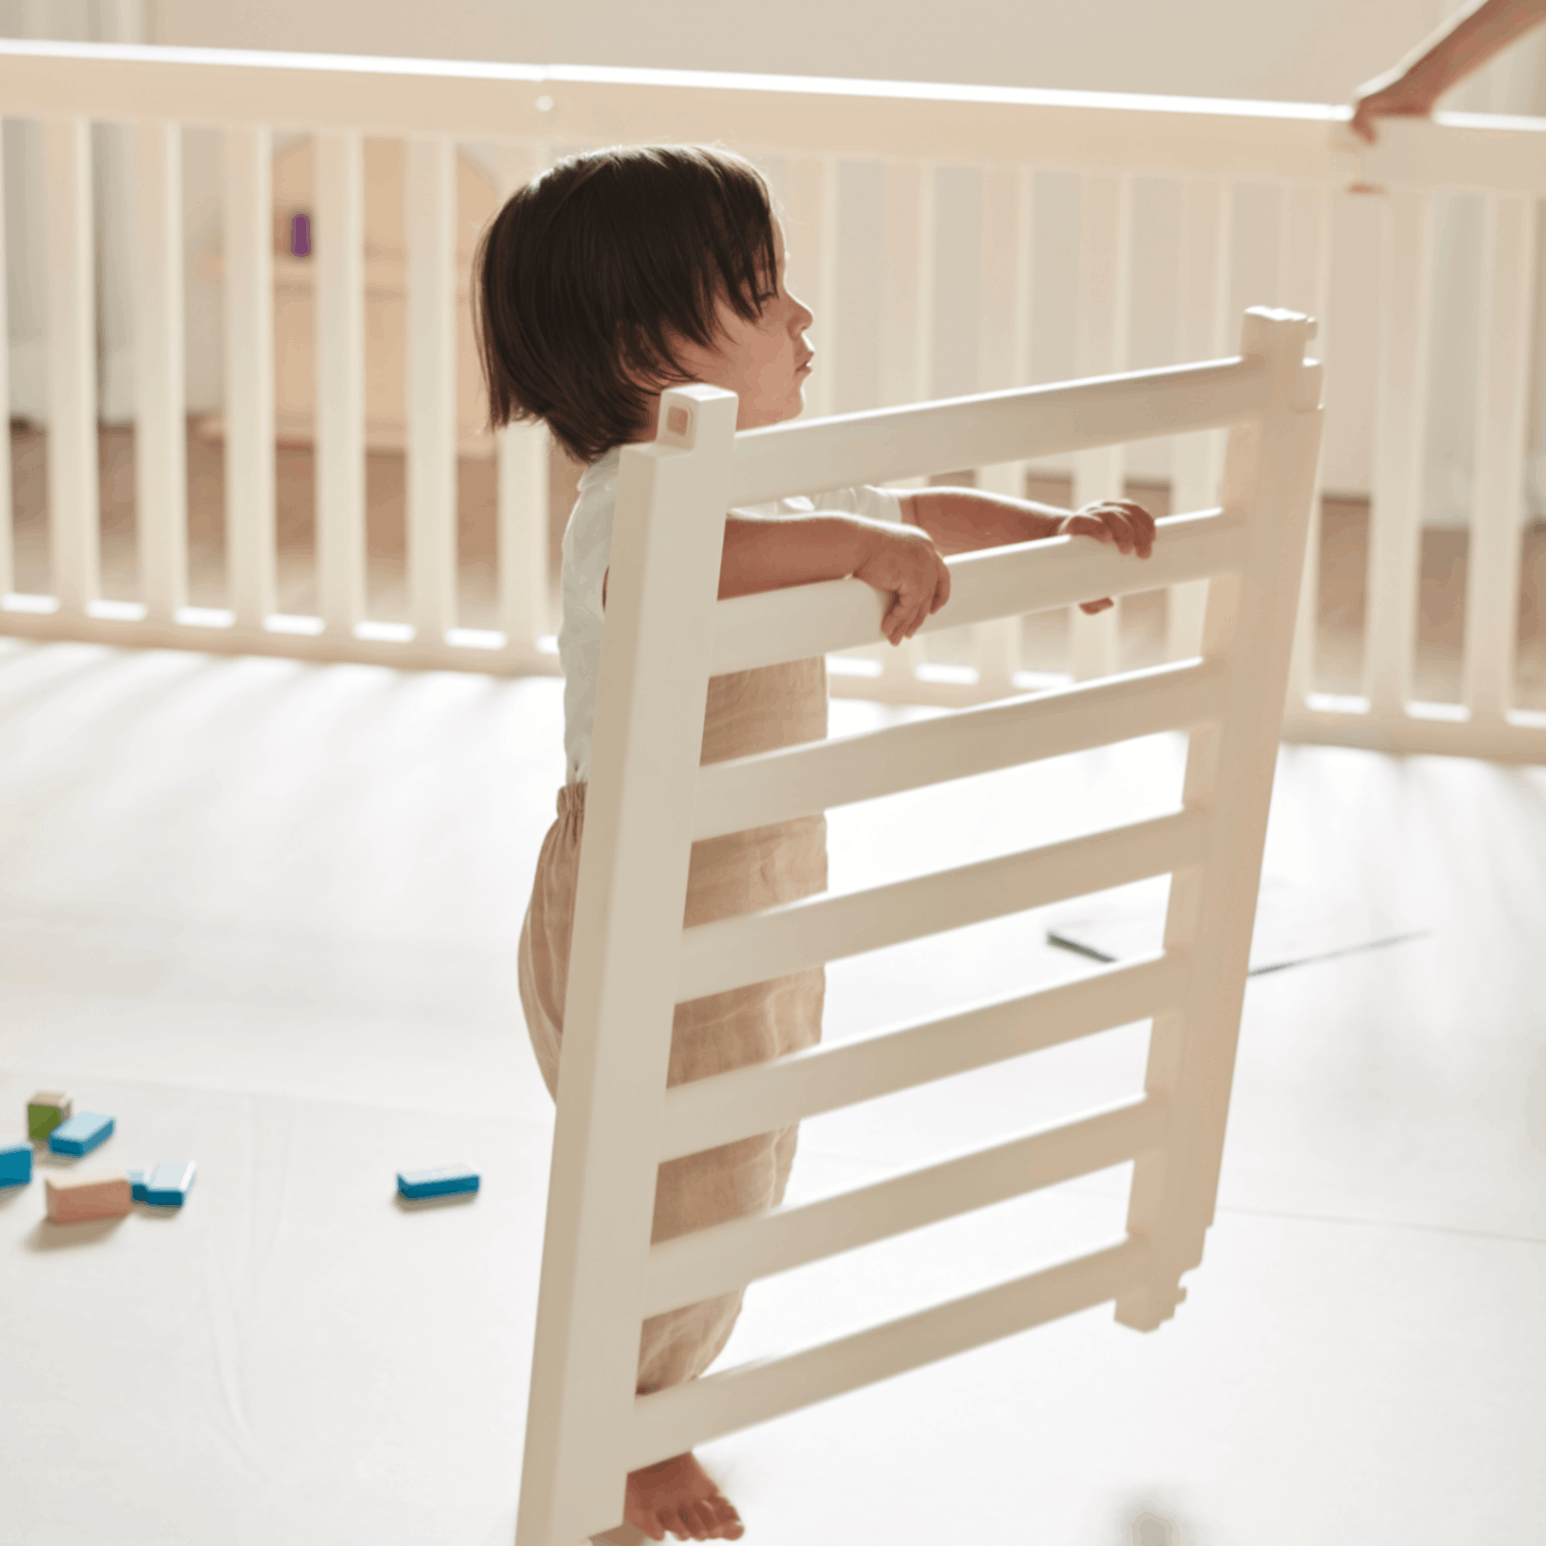 Toddler holding a Woodley Babyroom Panel